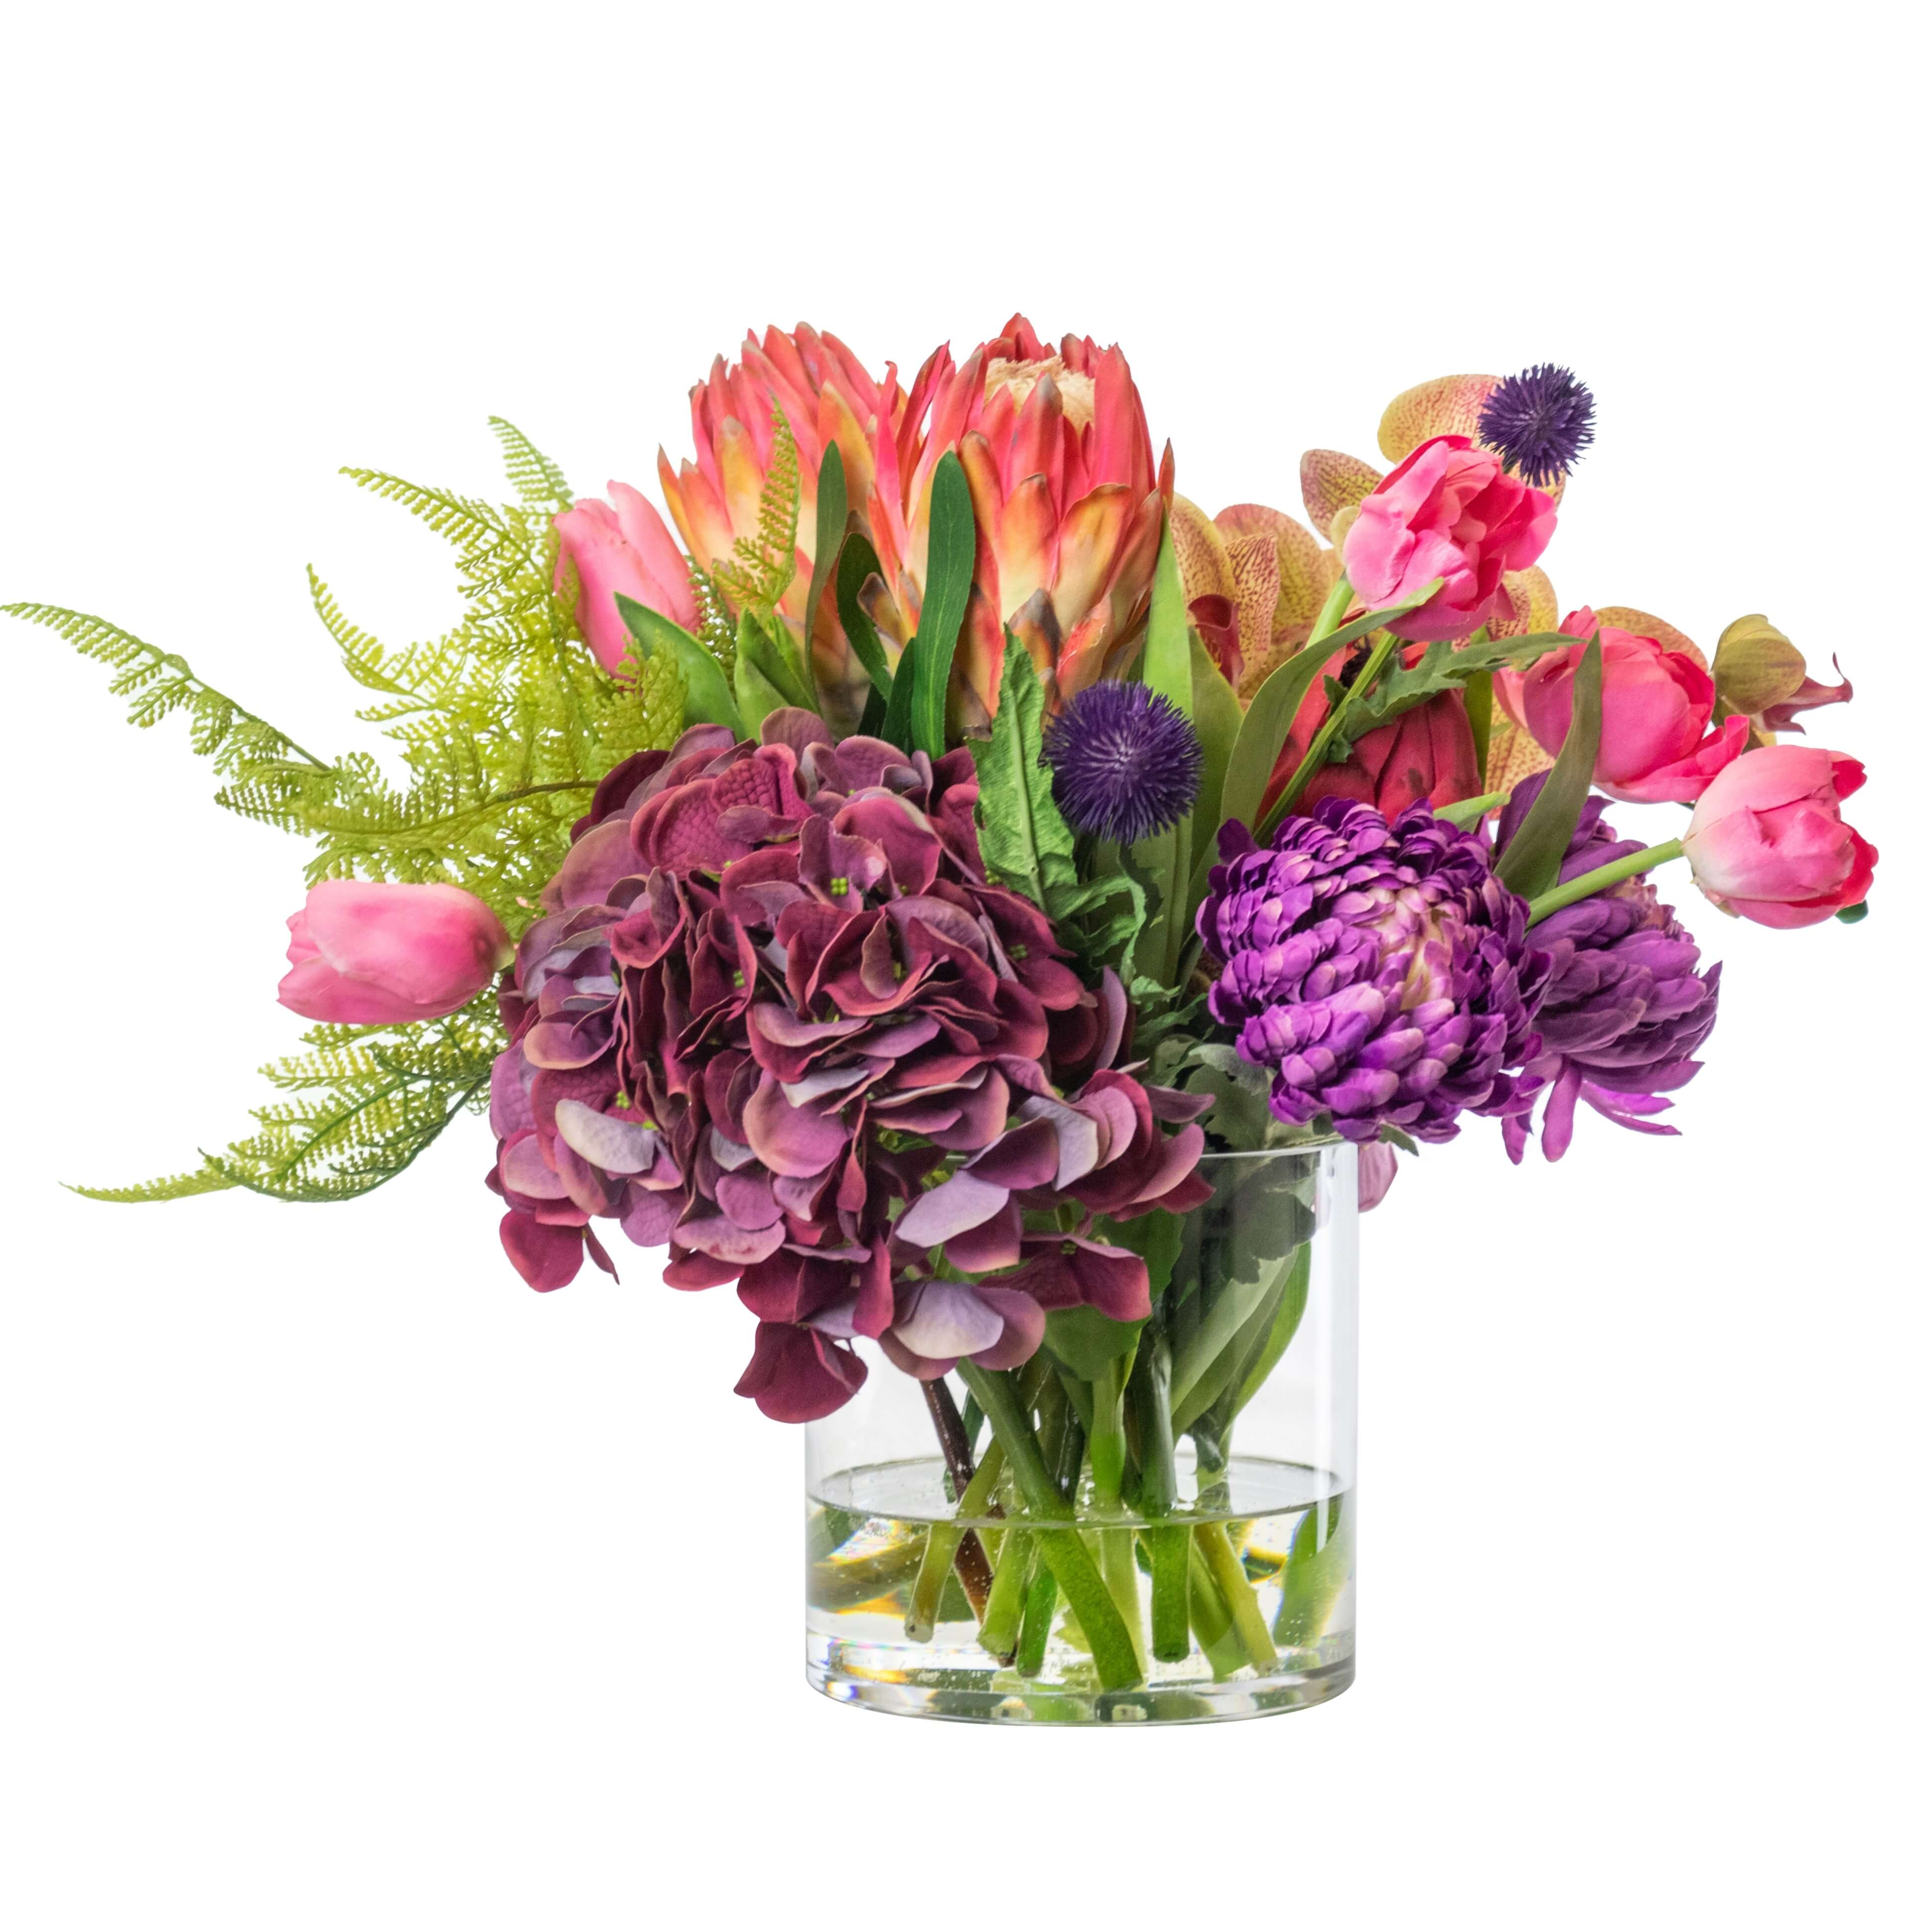 Artificial mixed flower arrangement in glass vase